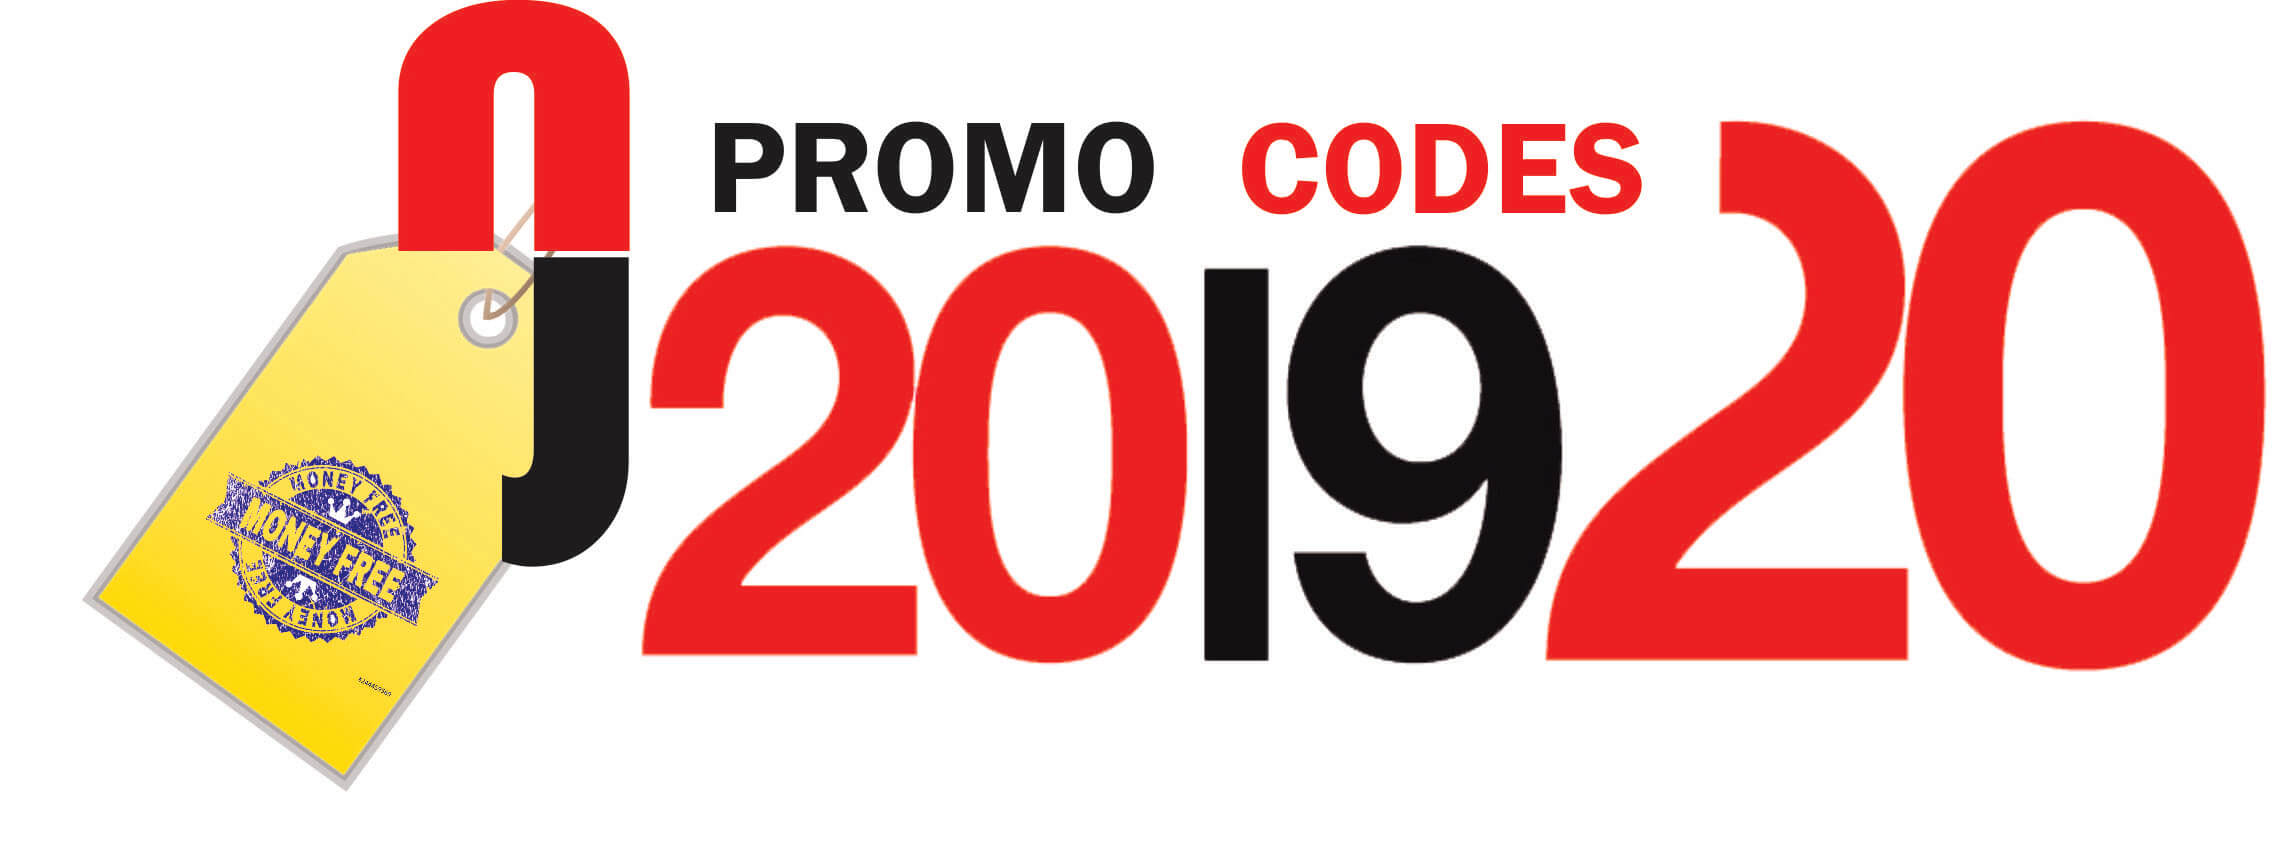 All NJ Online Casino Promo Codes for 2019-2020 1